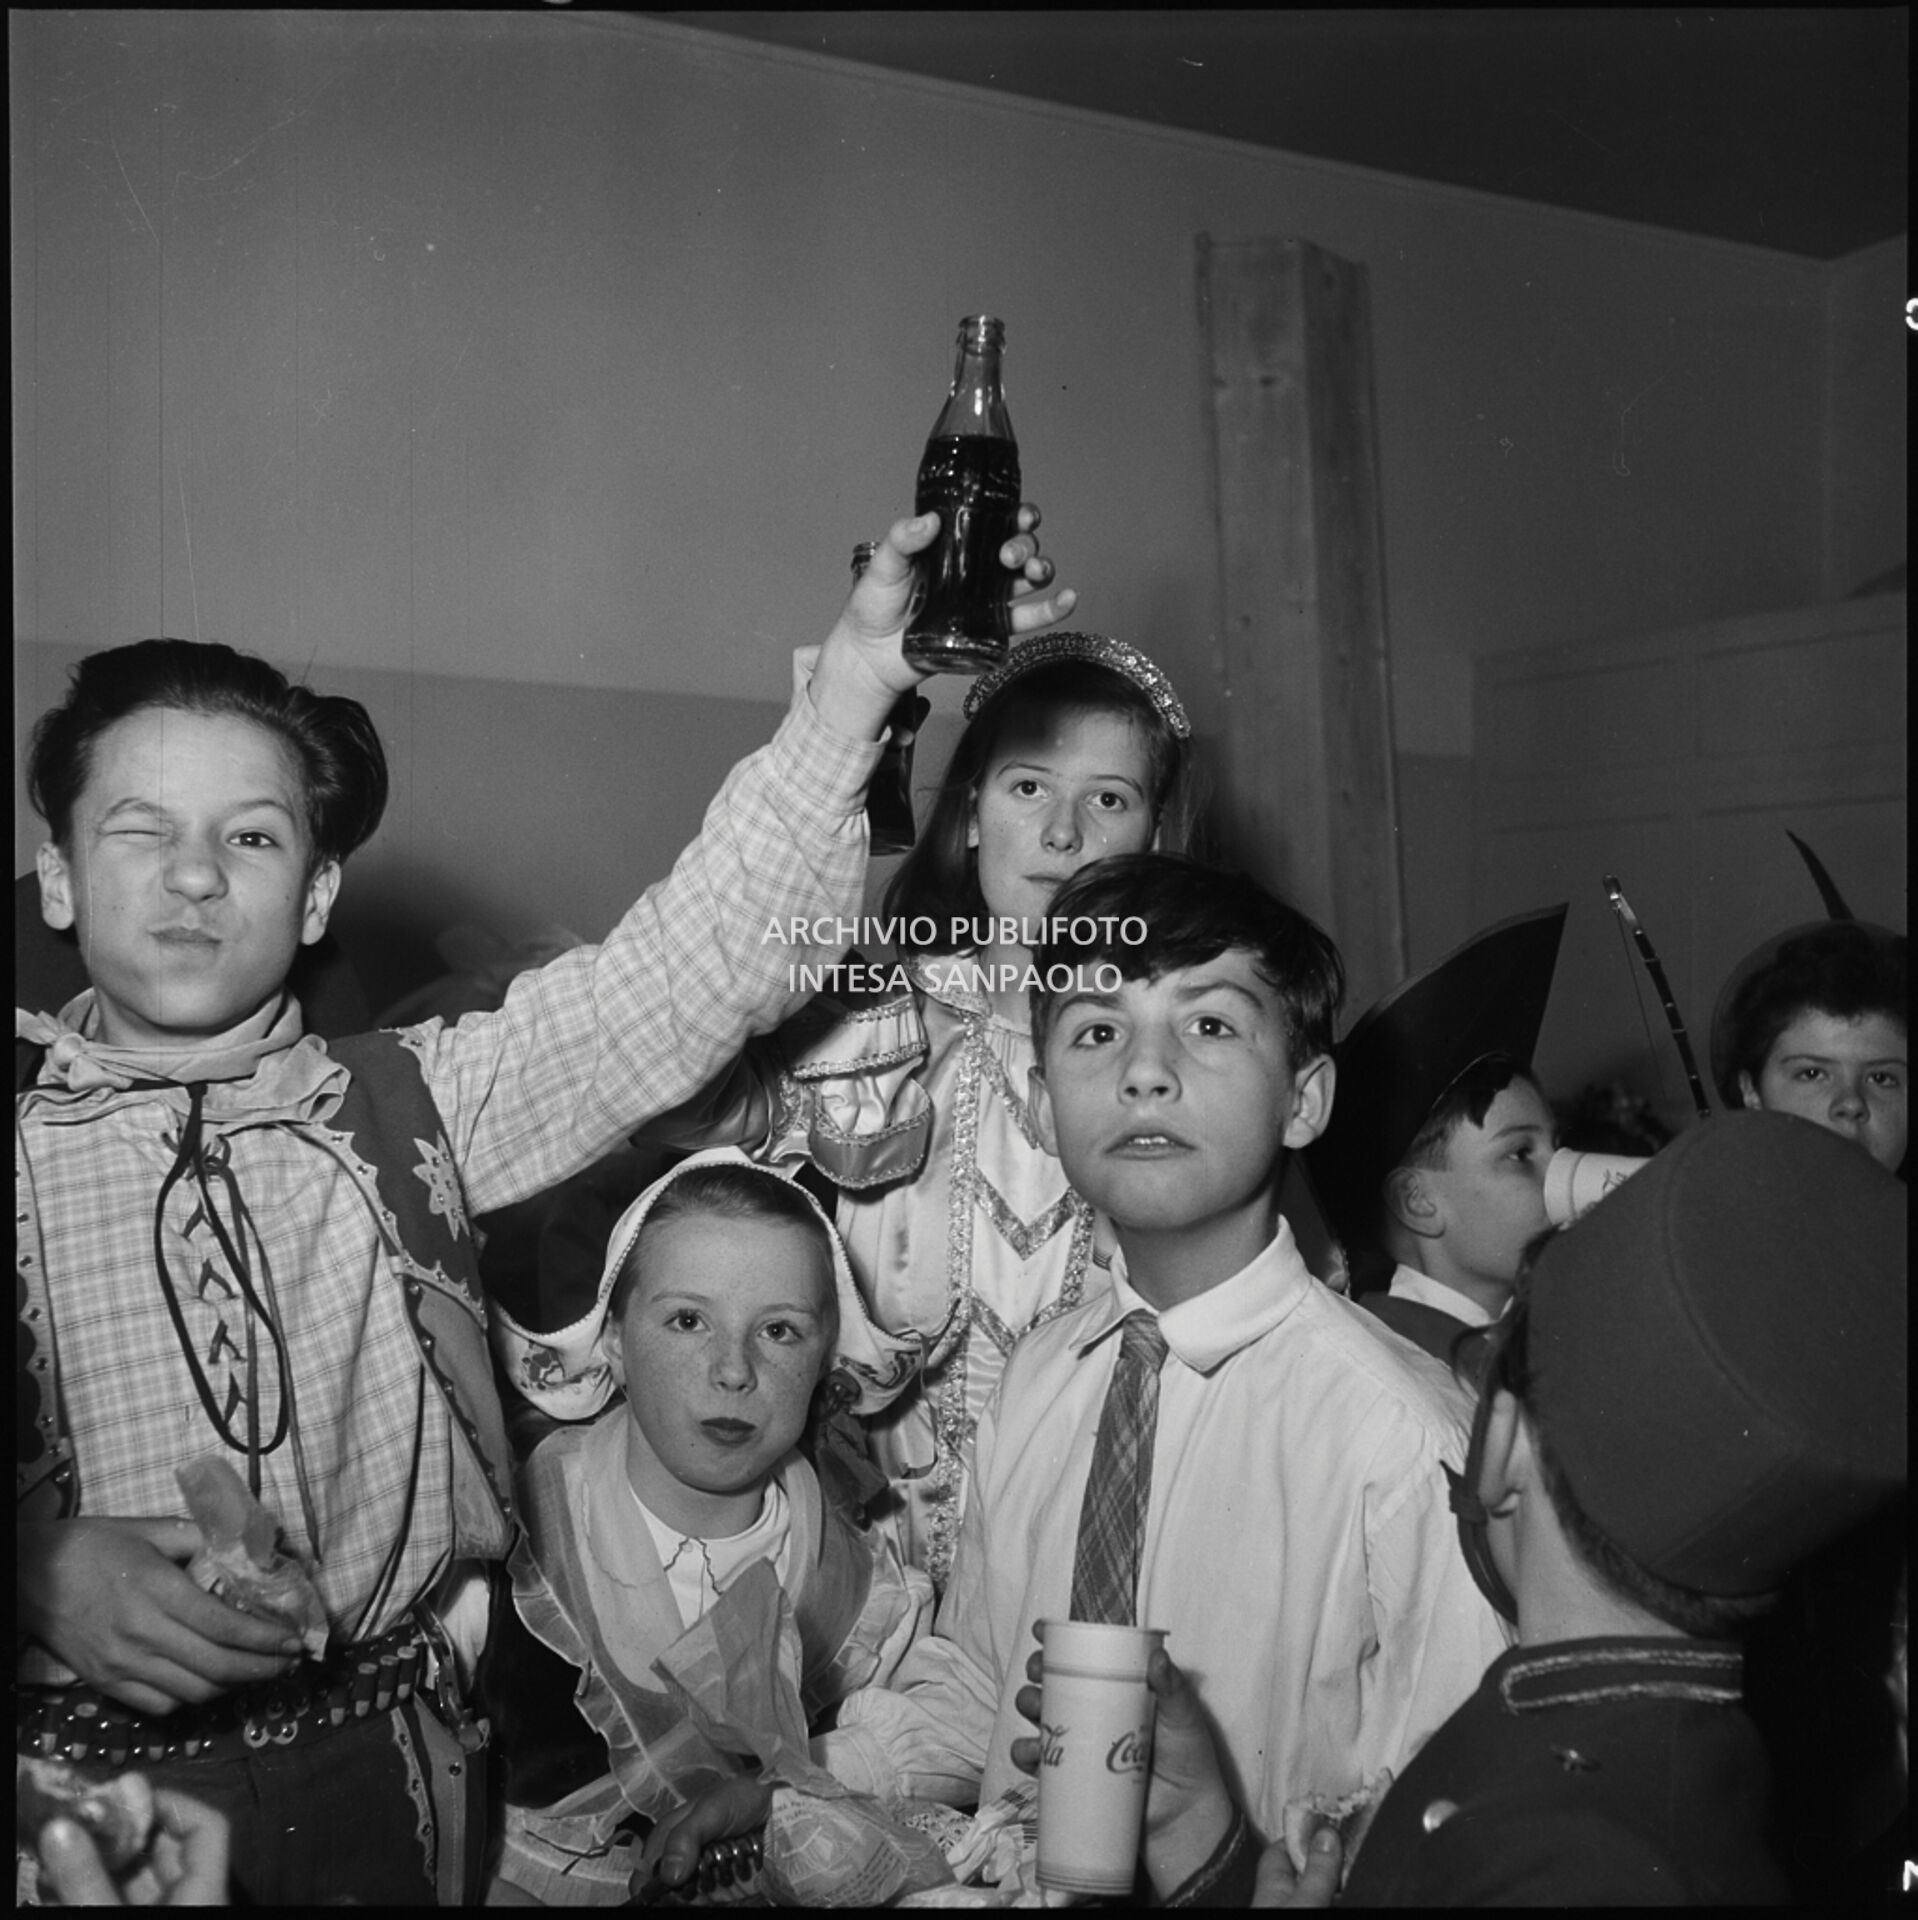 Bambini in maschera durante una festa di carnevale